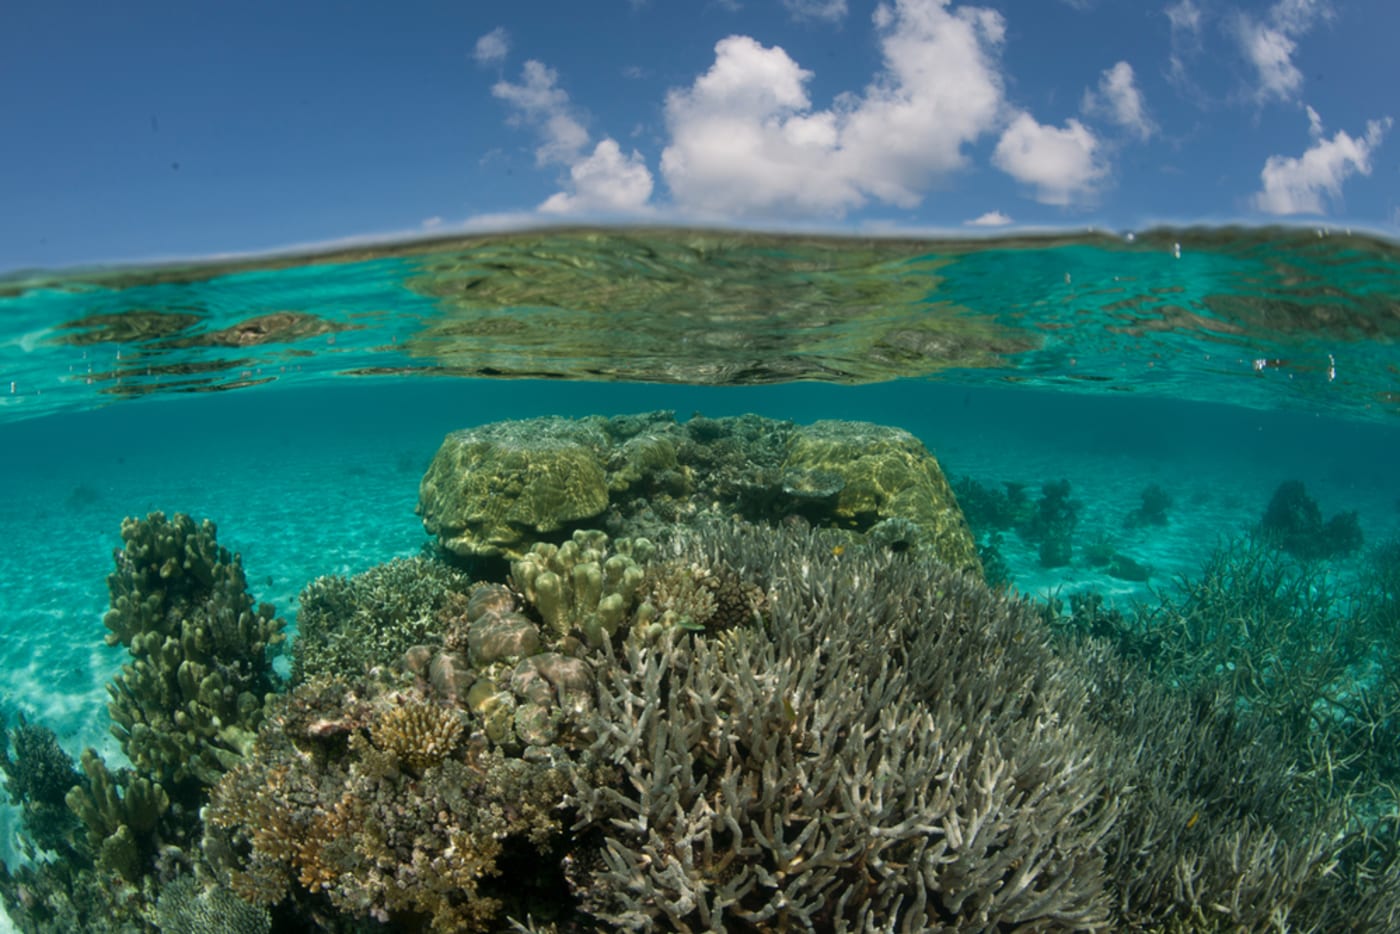 Beautiful coral reef of shallow Bismarck Sea. M'buke Islands, Manus, Papua New
Guinea